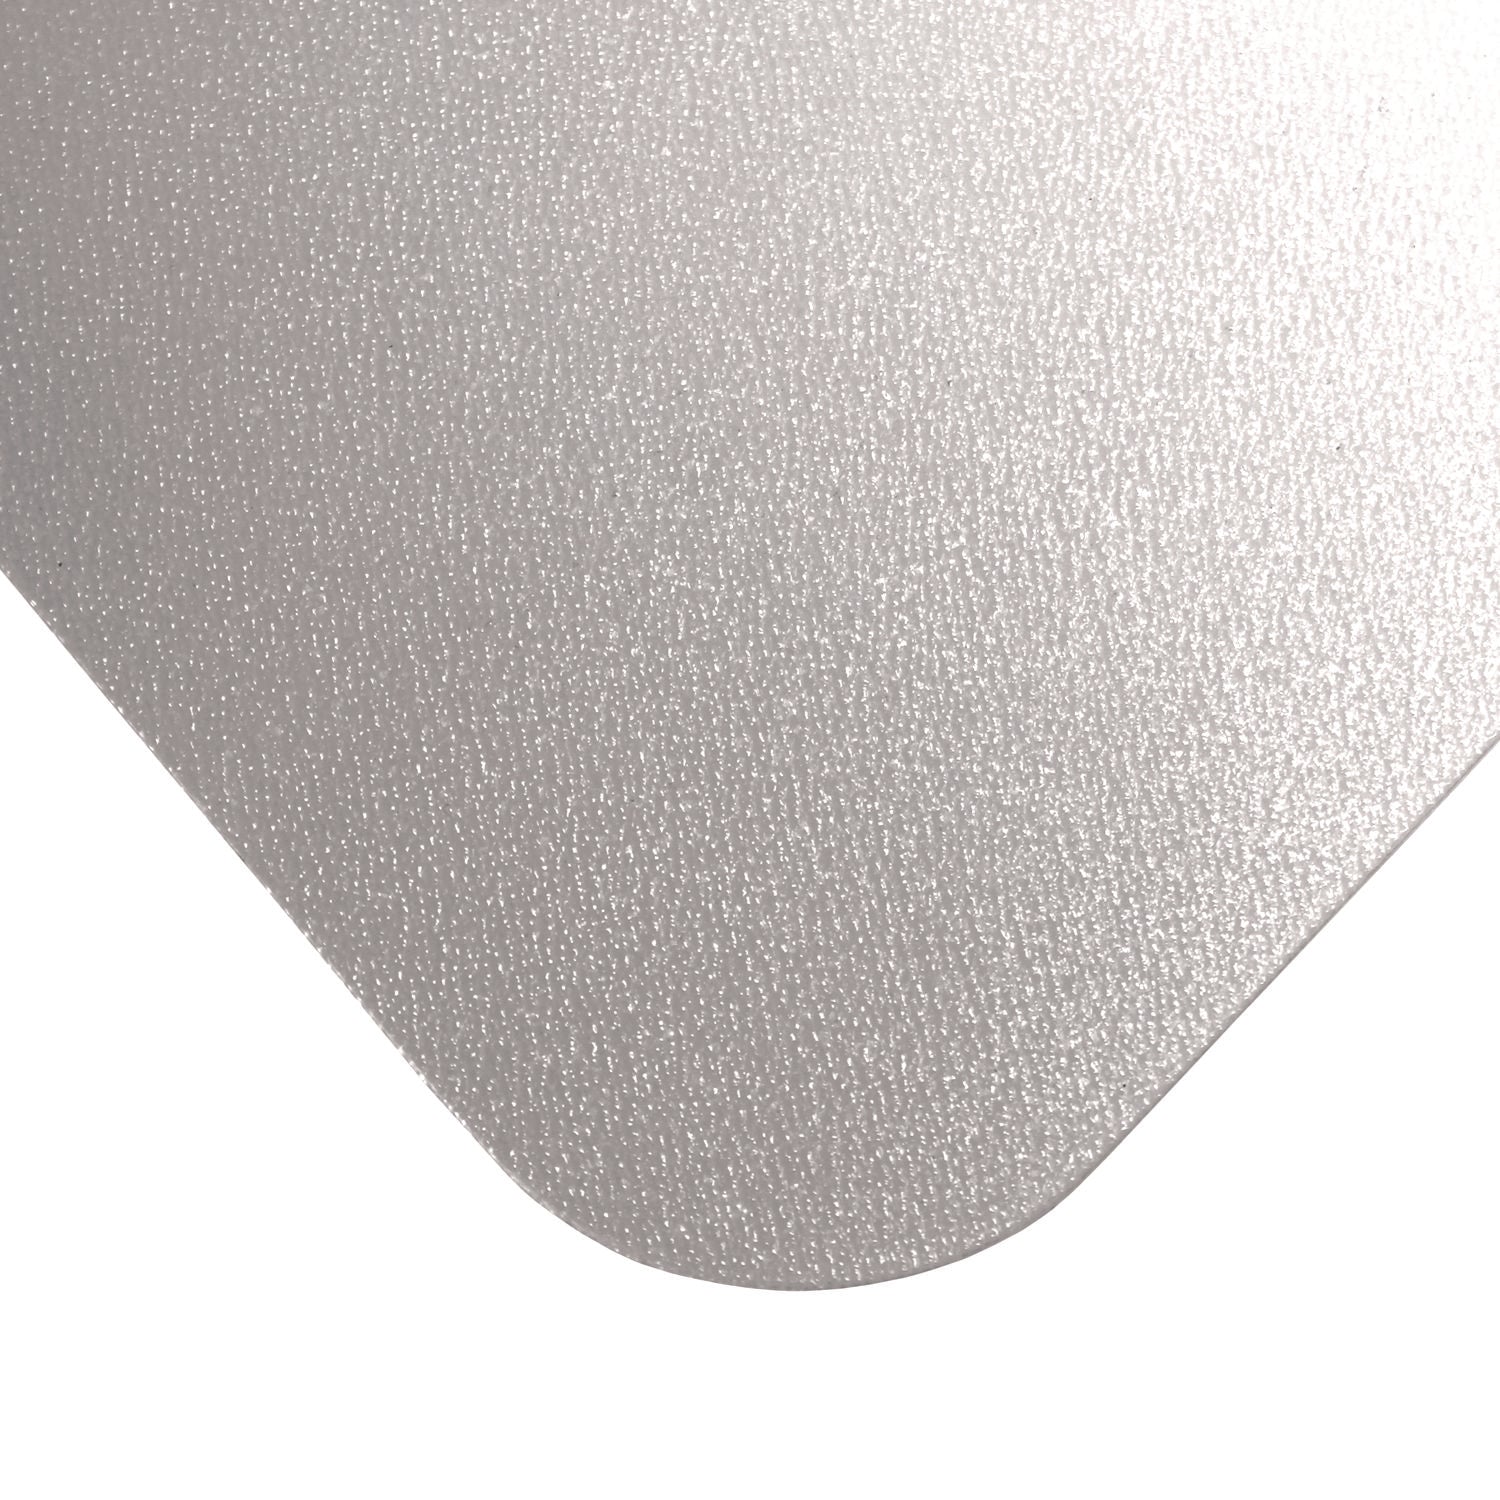 ecotex-marlon-bioplus-rectangular-polycarbonate-chair-mat-for-hard-floors-rectangular-46-x-60-clear_flrnrcmflbs0004 - 6